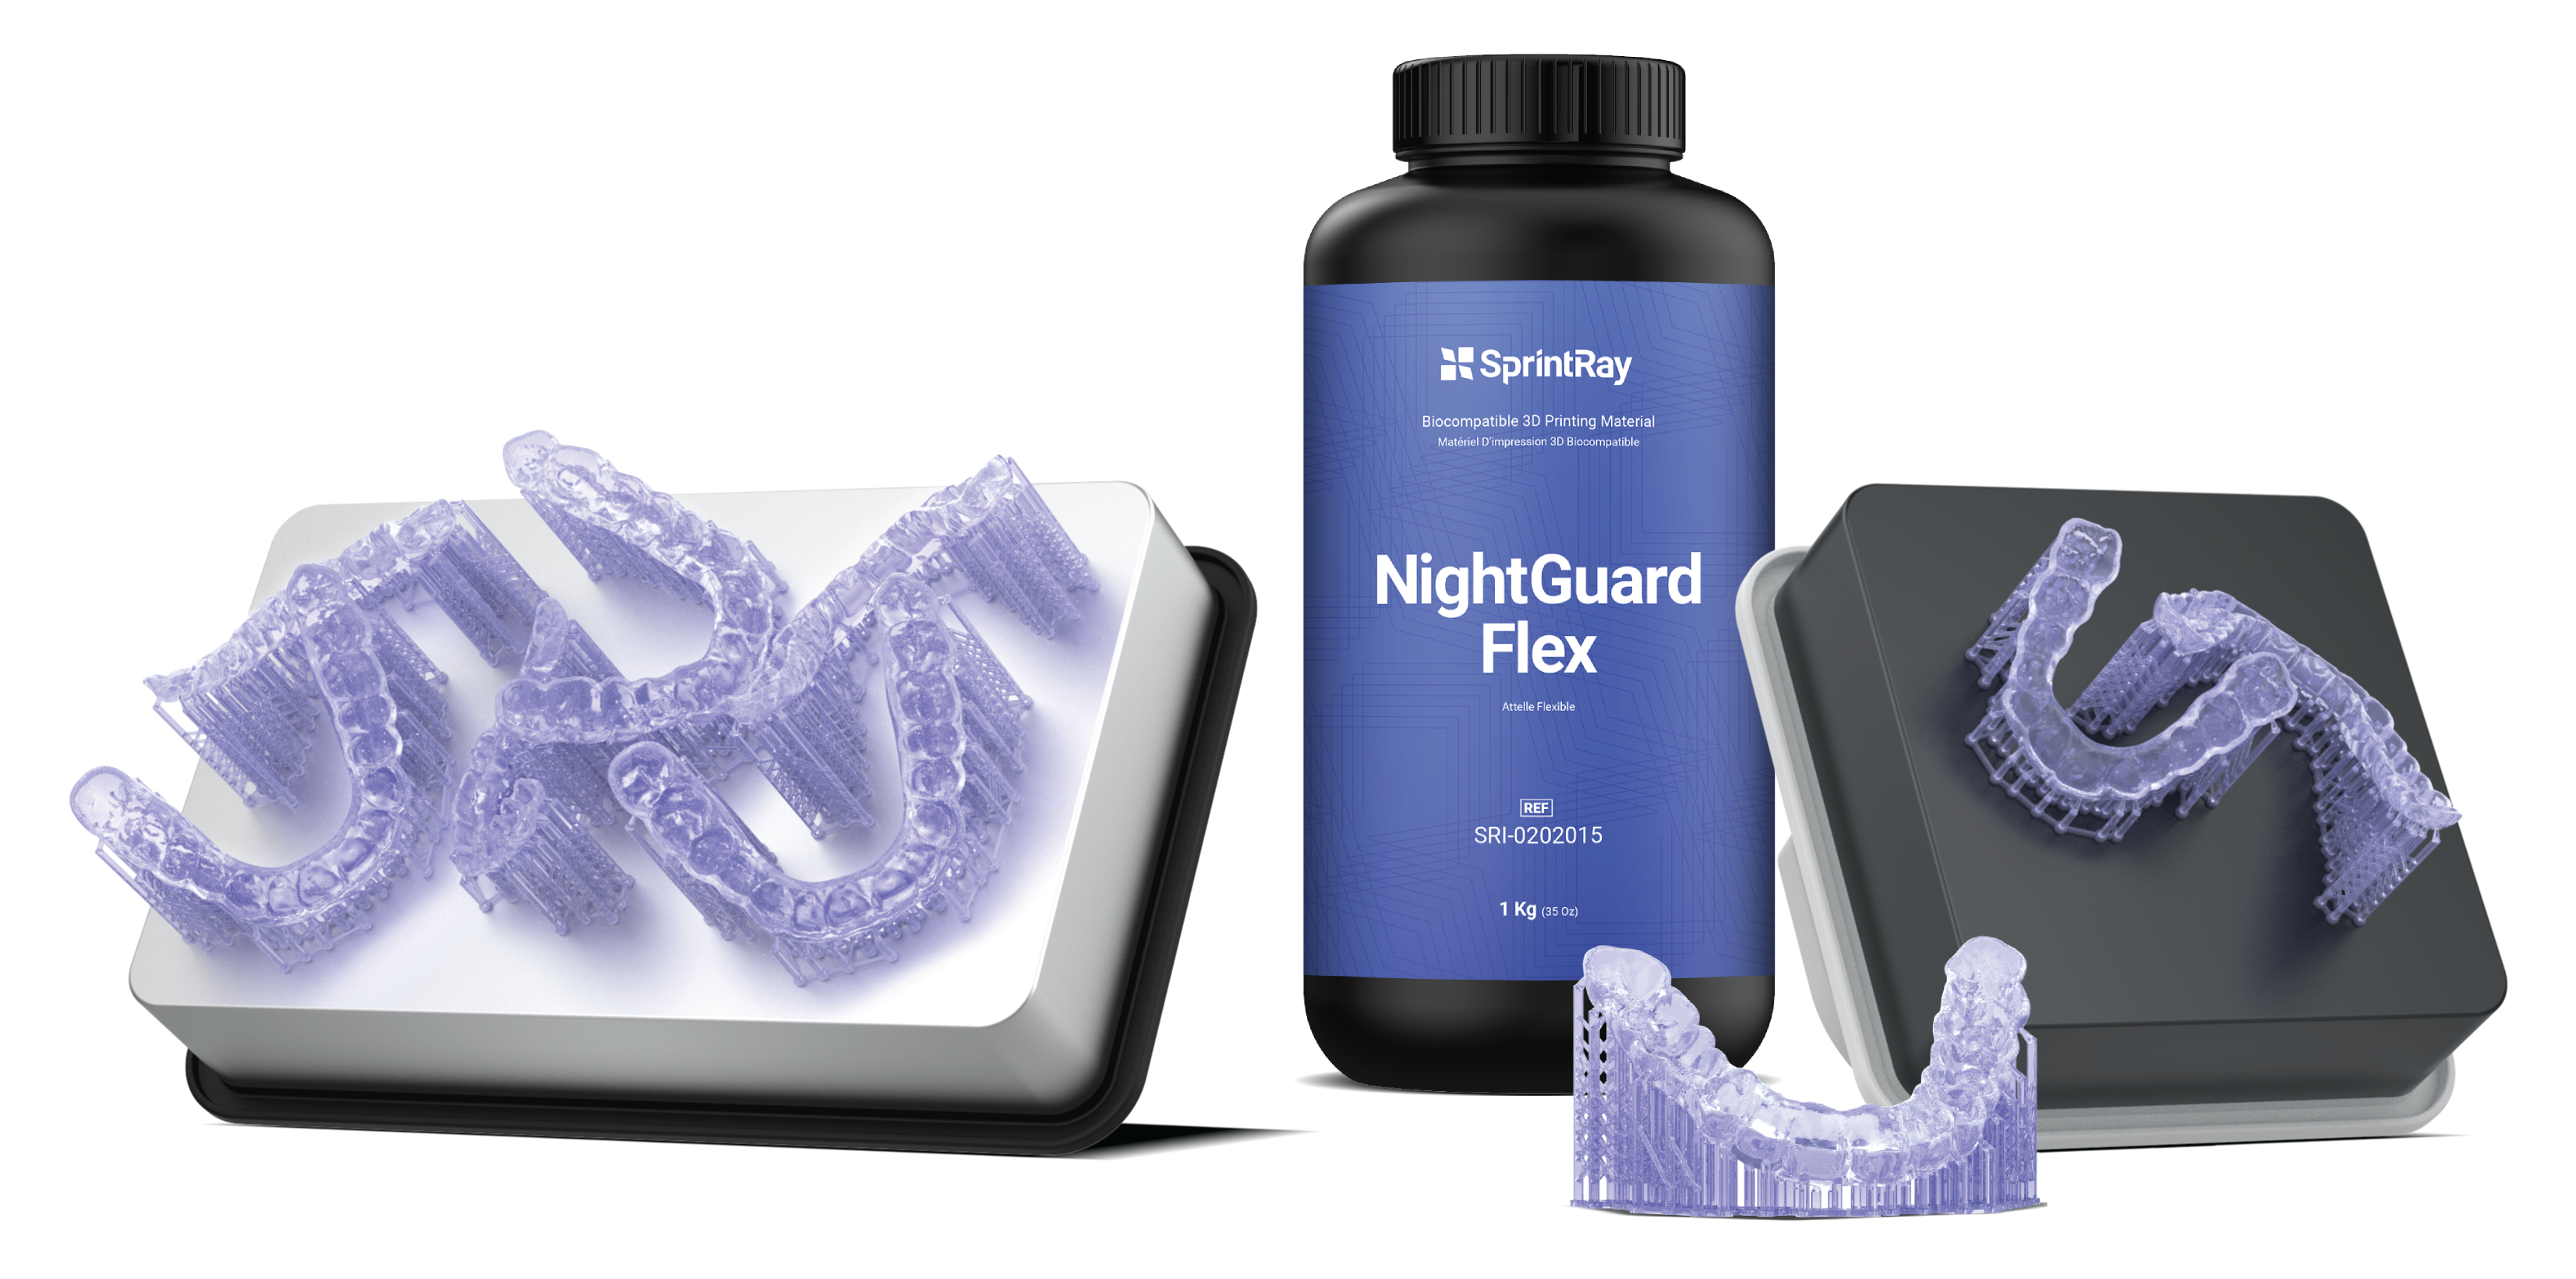 NightGuard Flex from SprintRay Inc.